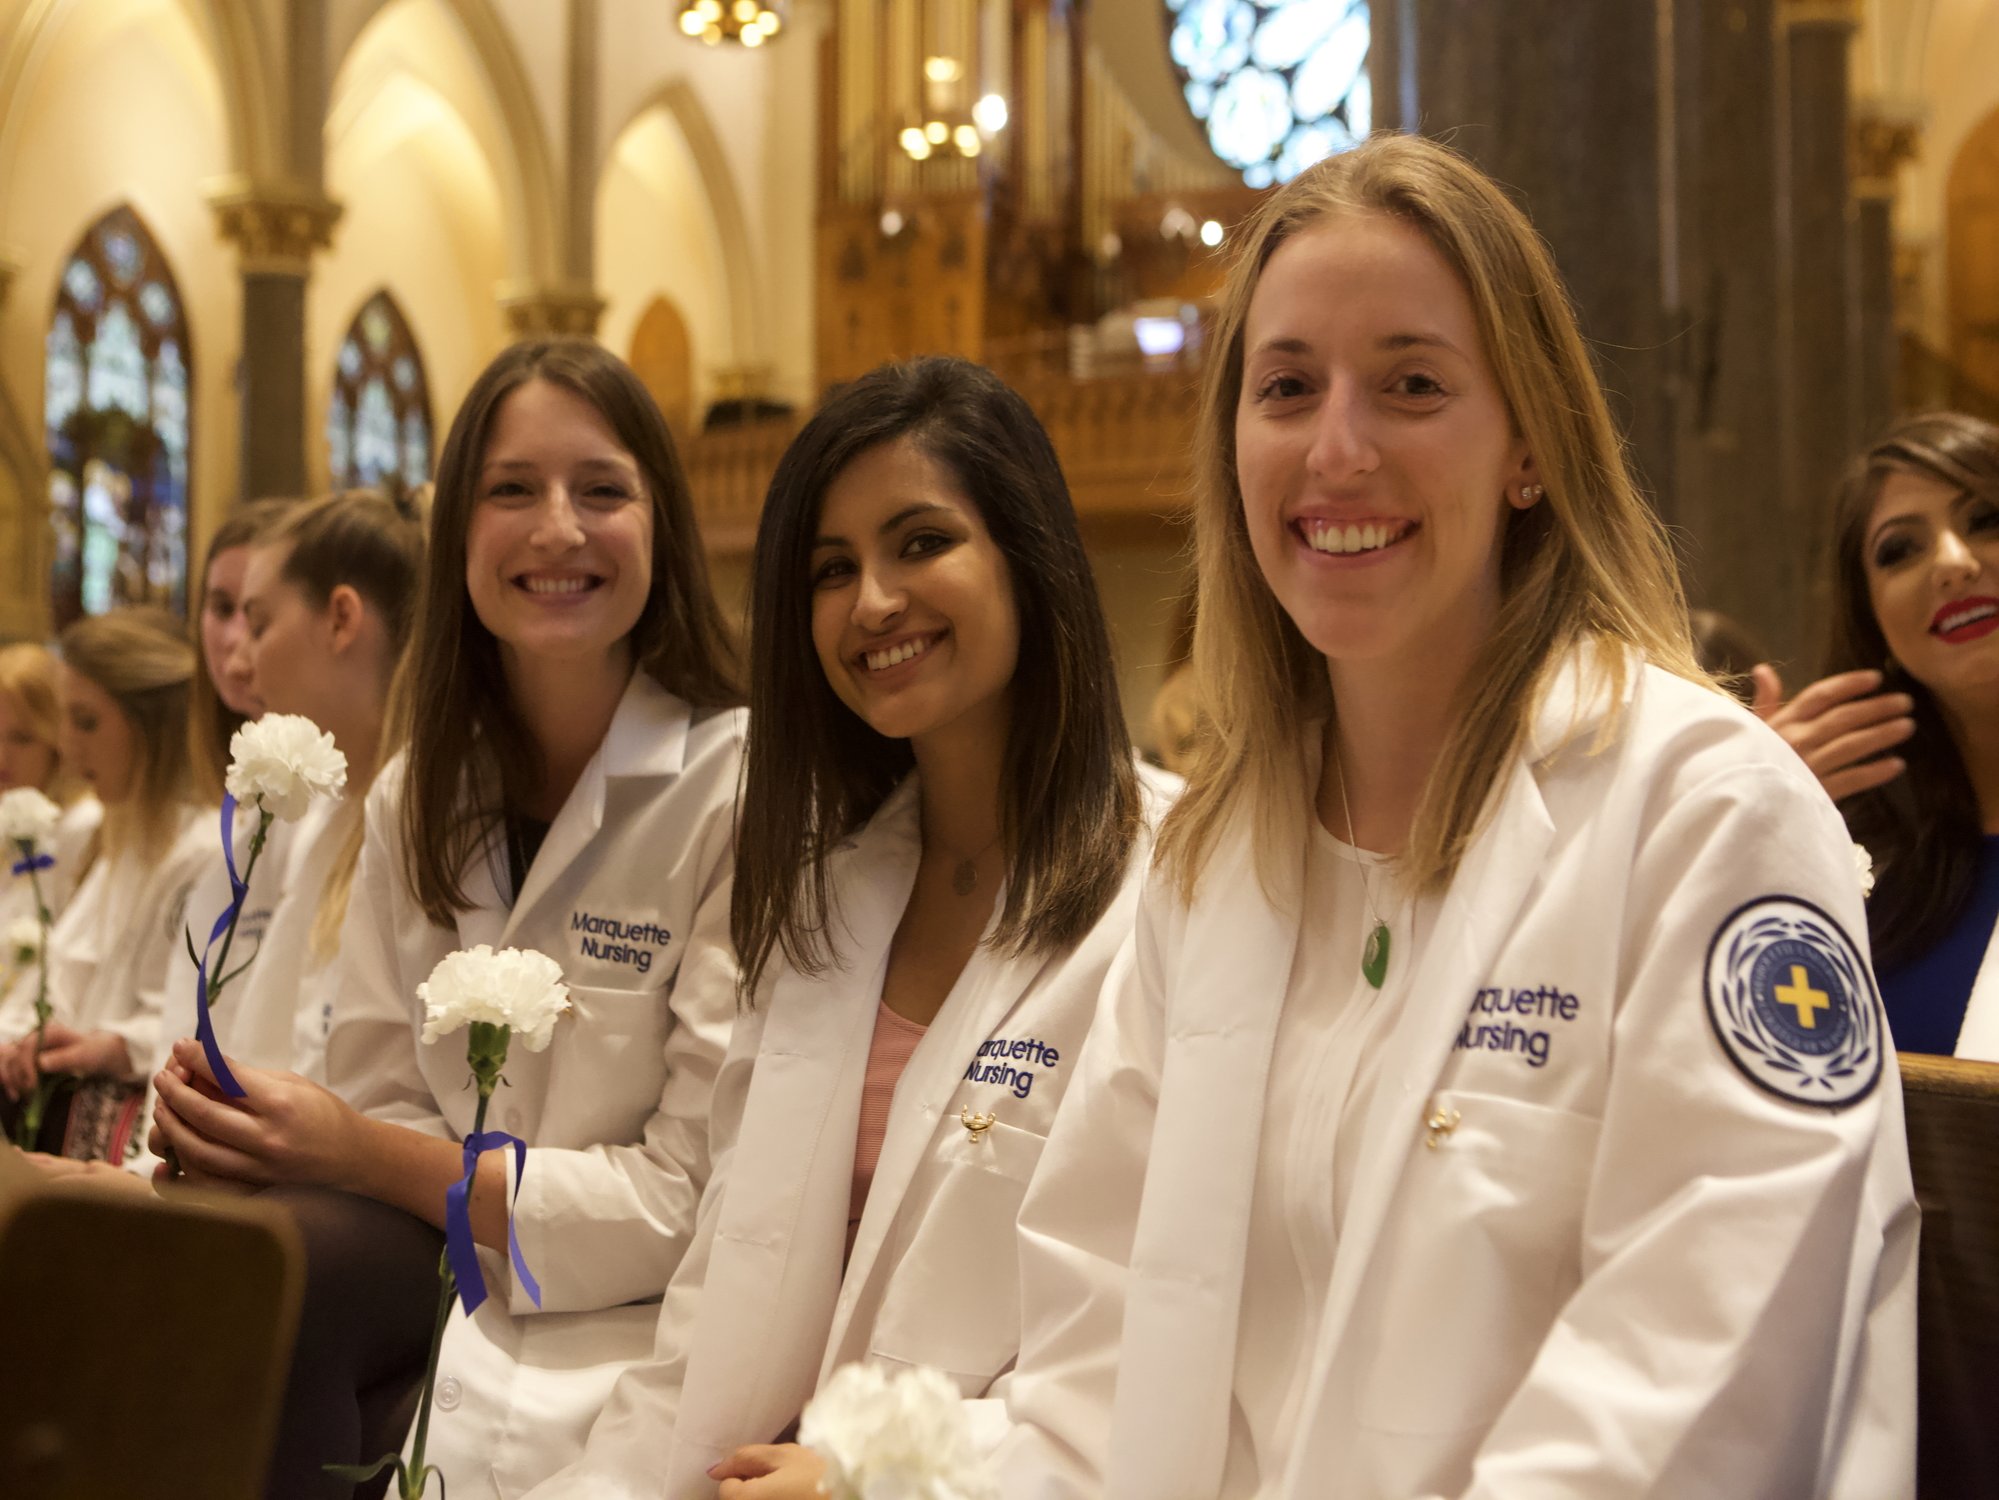 Three white coat nursing students smile